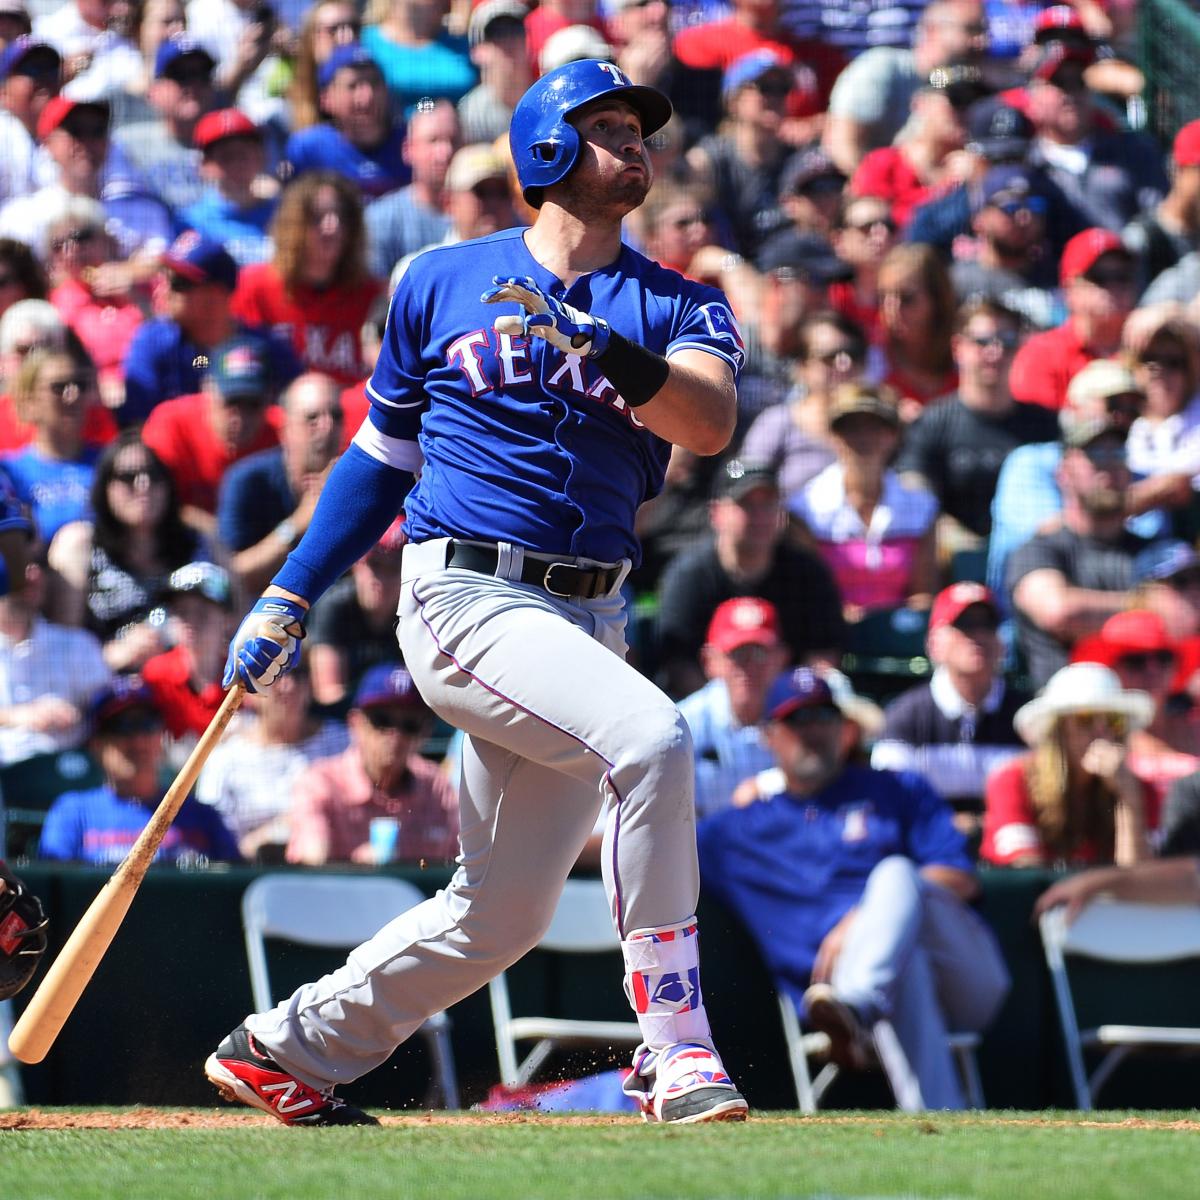 Rangers slugger Joey Gallo can appreciate bat-flipping and emotion